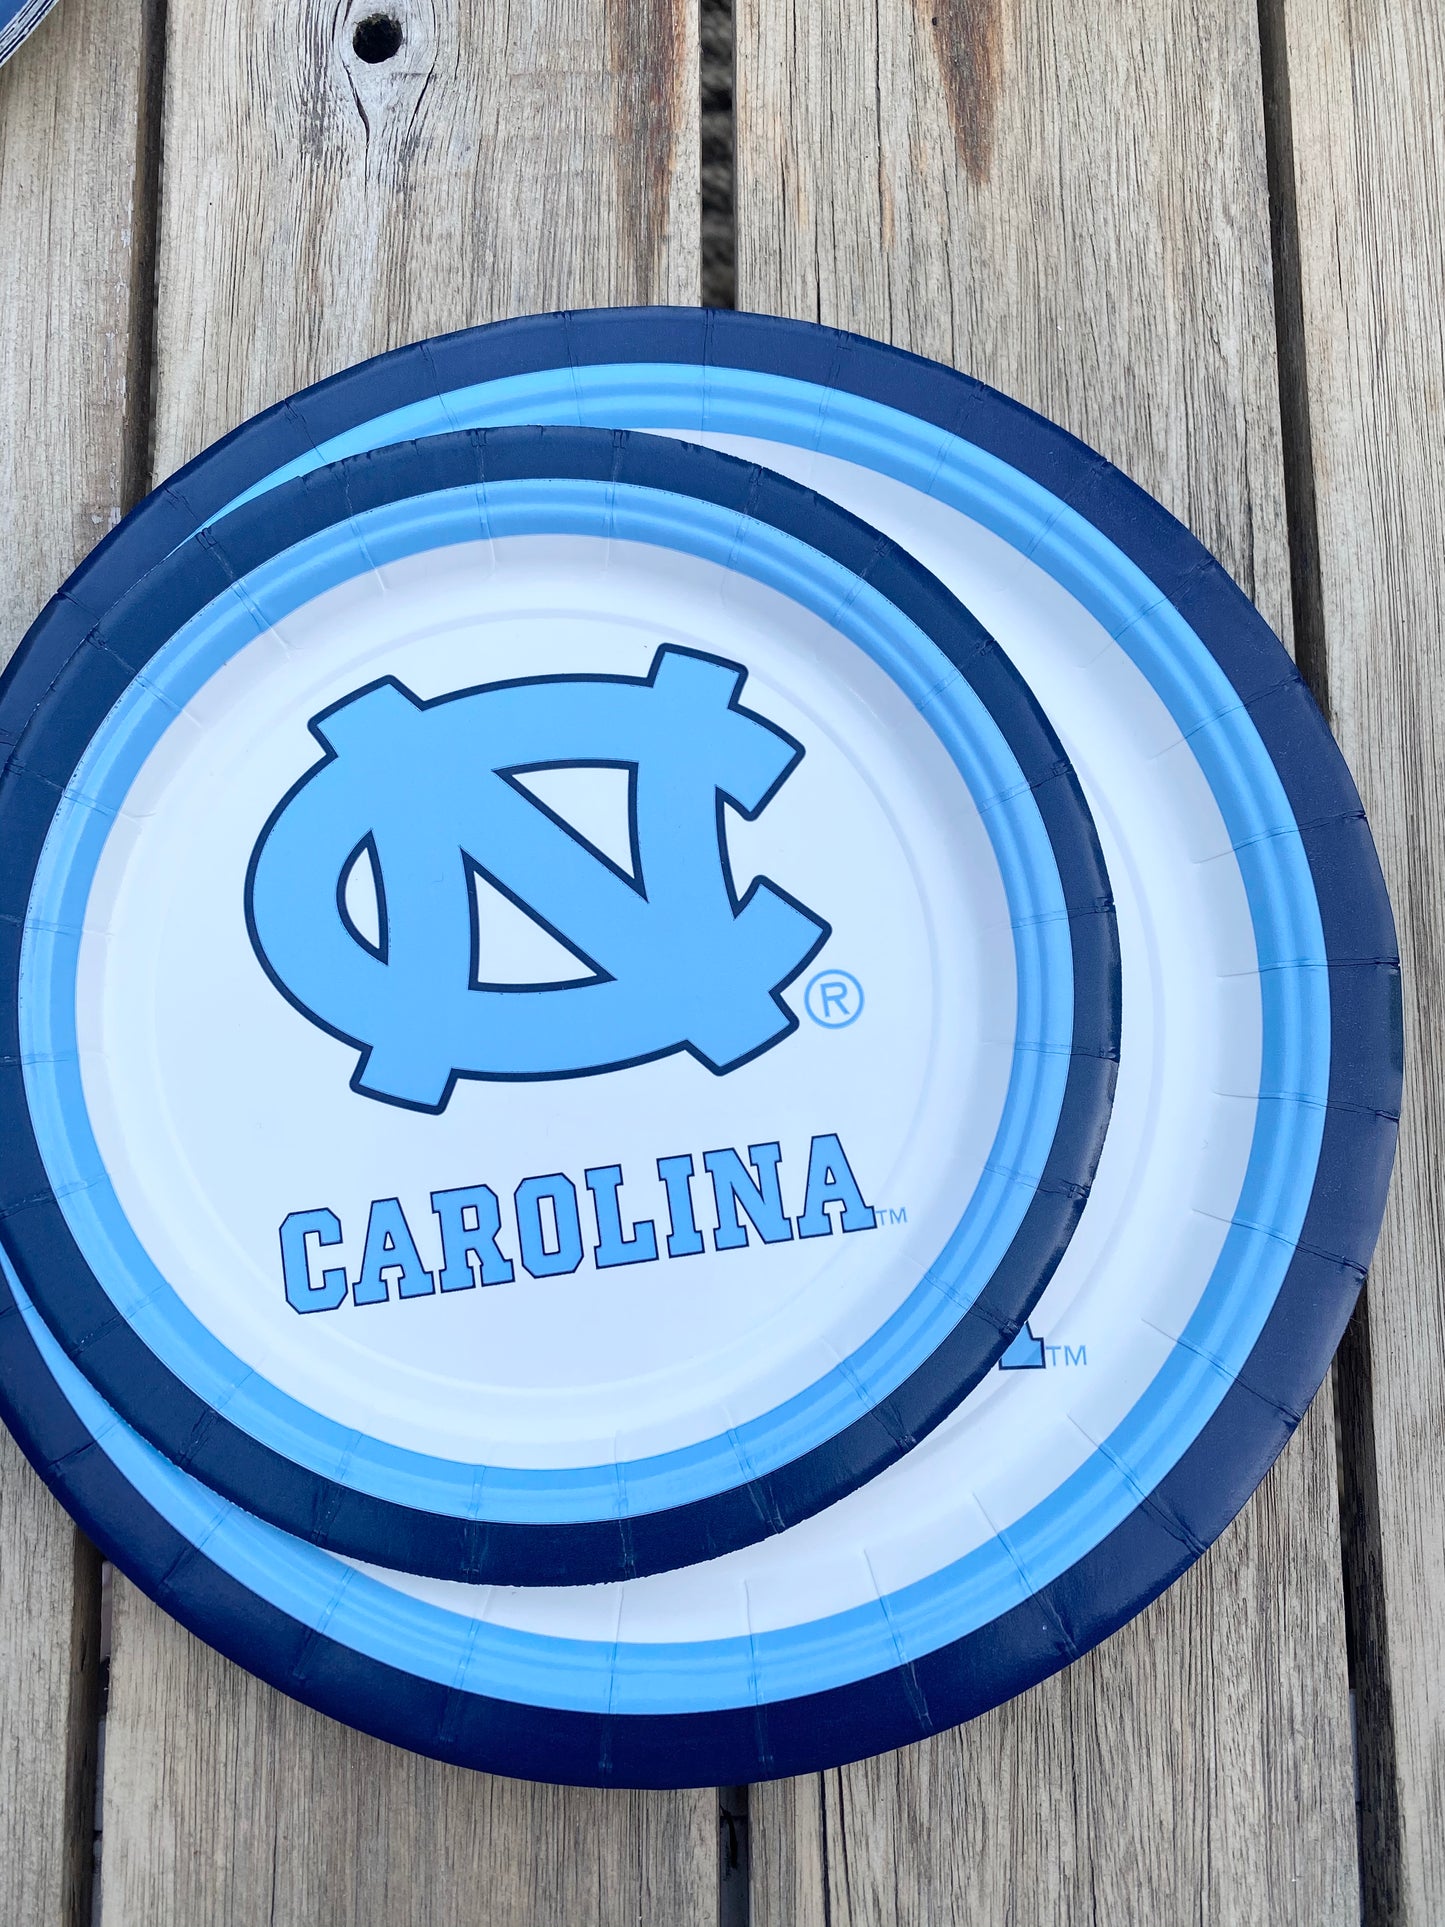 North Carolina Tar Heels 7 Inch Paper Plates (12 Count)